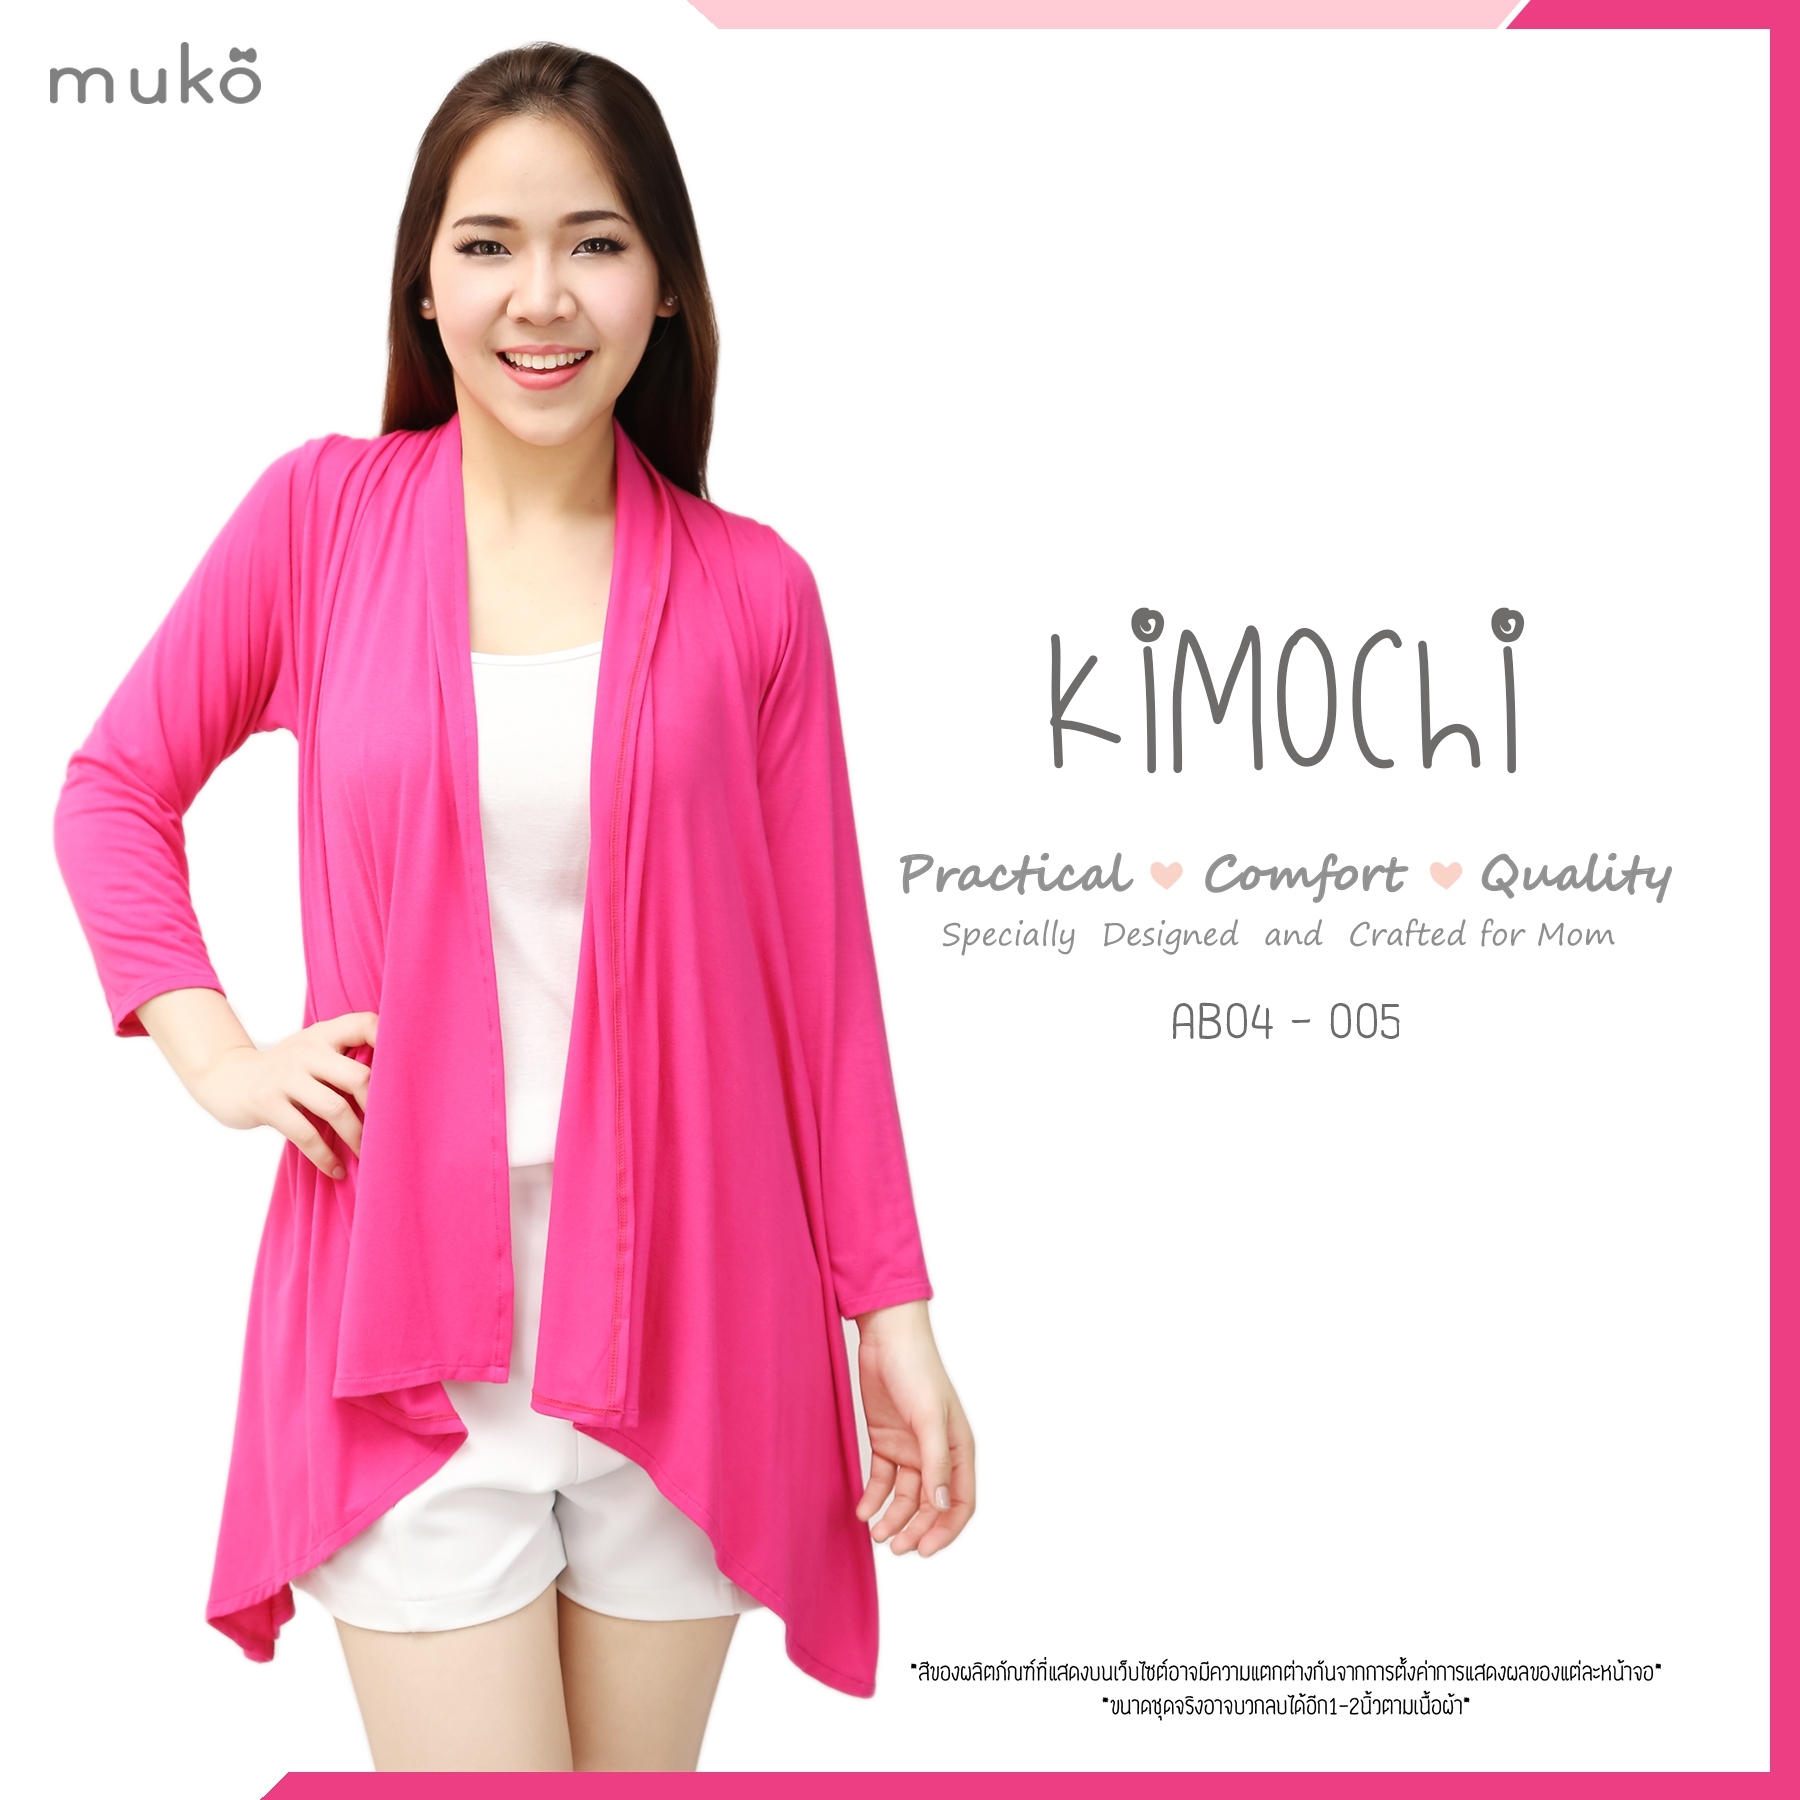 Muko Kimochi เสื้อคลุมท้อง AB04-005 บานเย็น